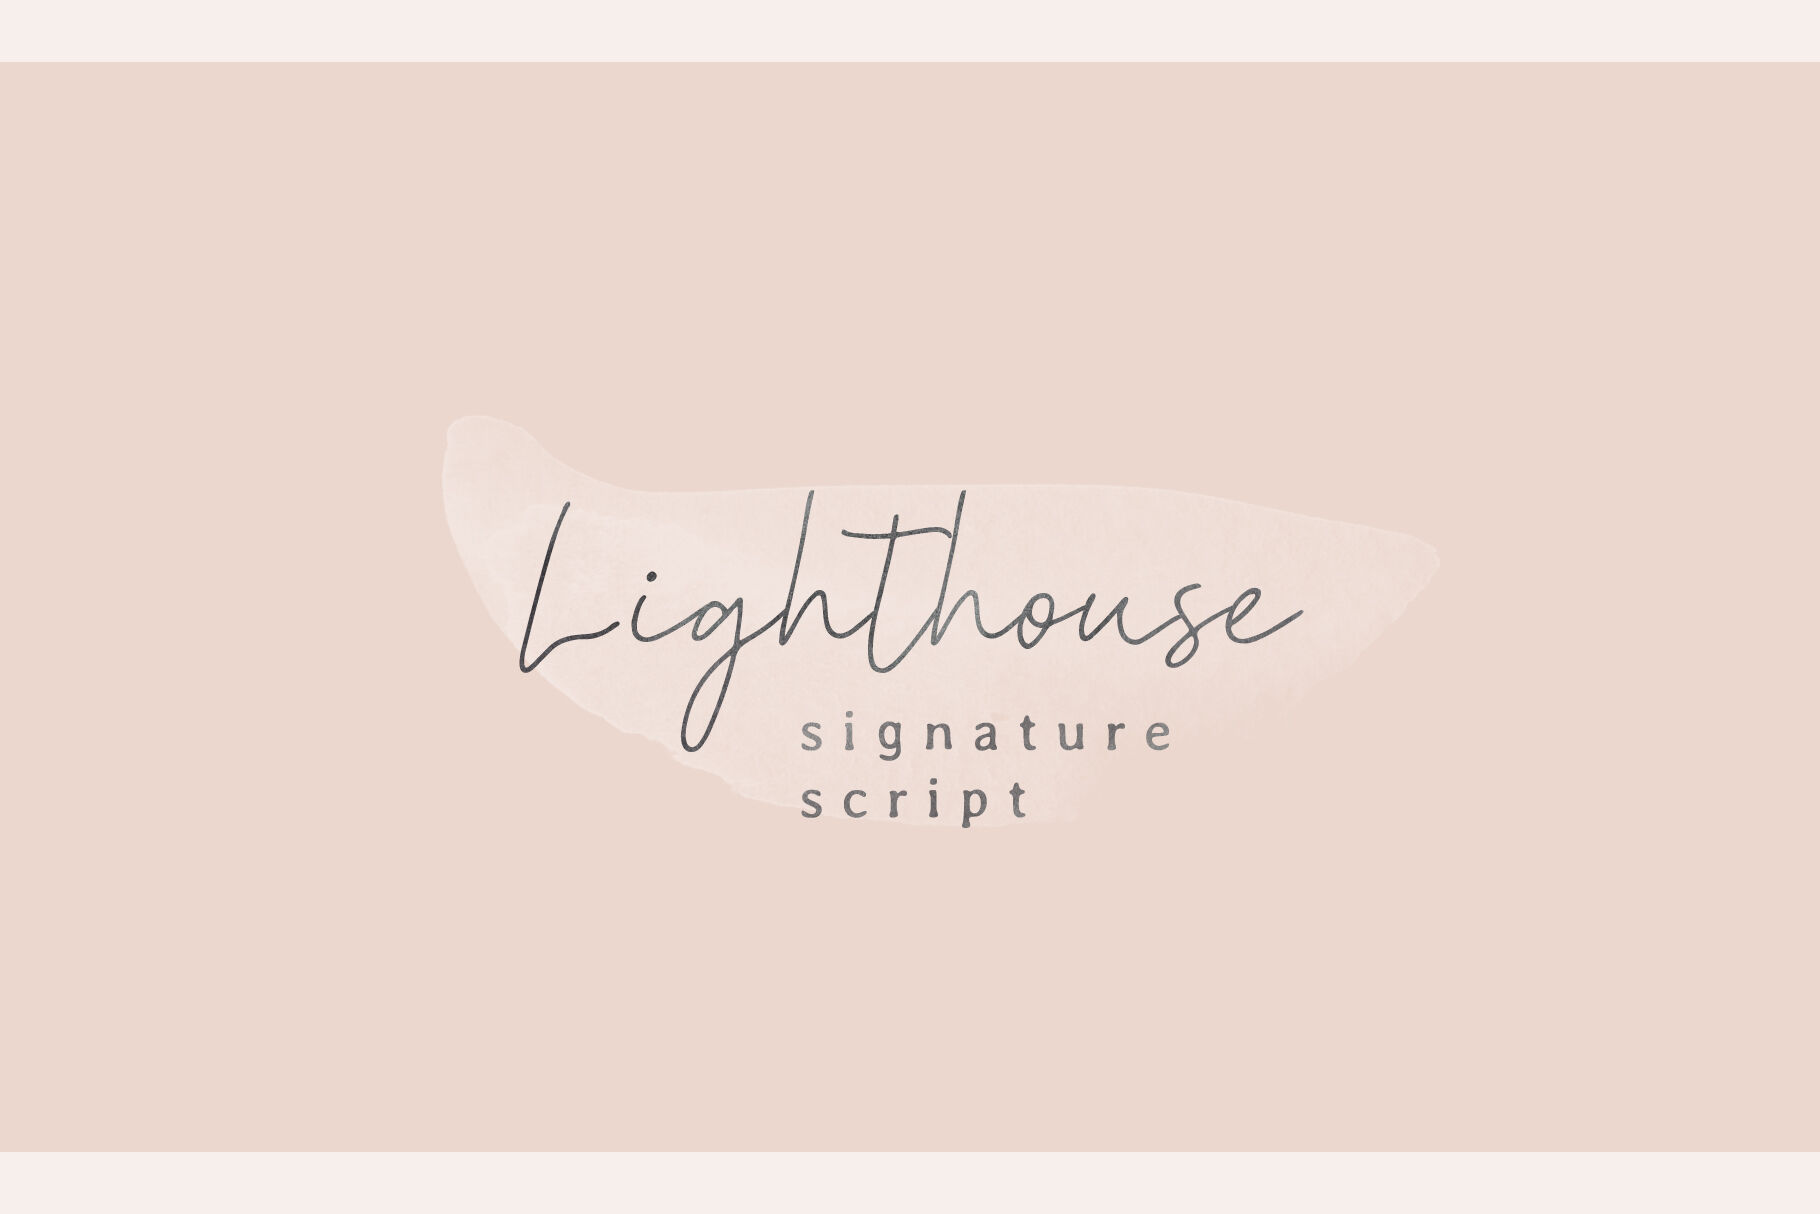 Lighthouse Signature Script By Northernlight Studio Thehungryjpeg Com